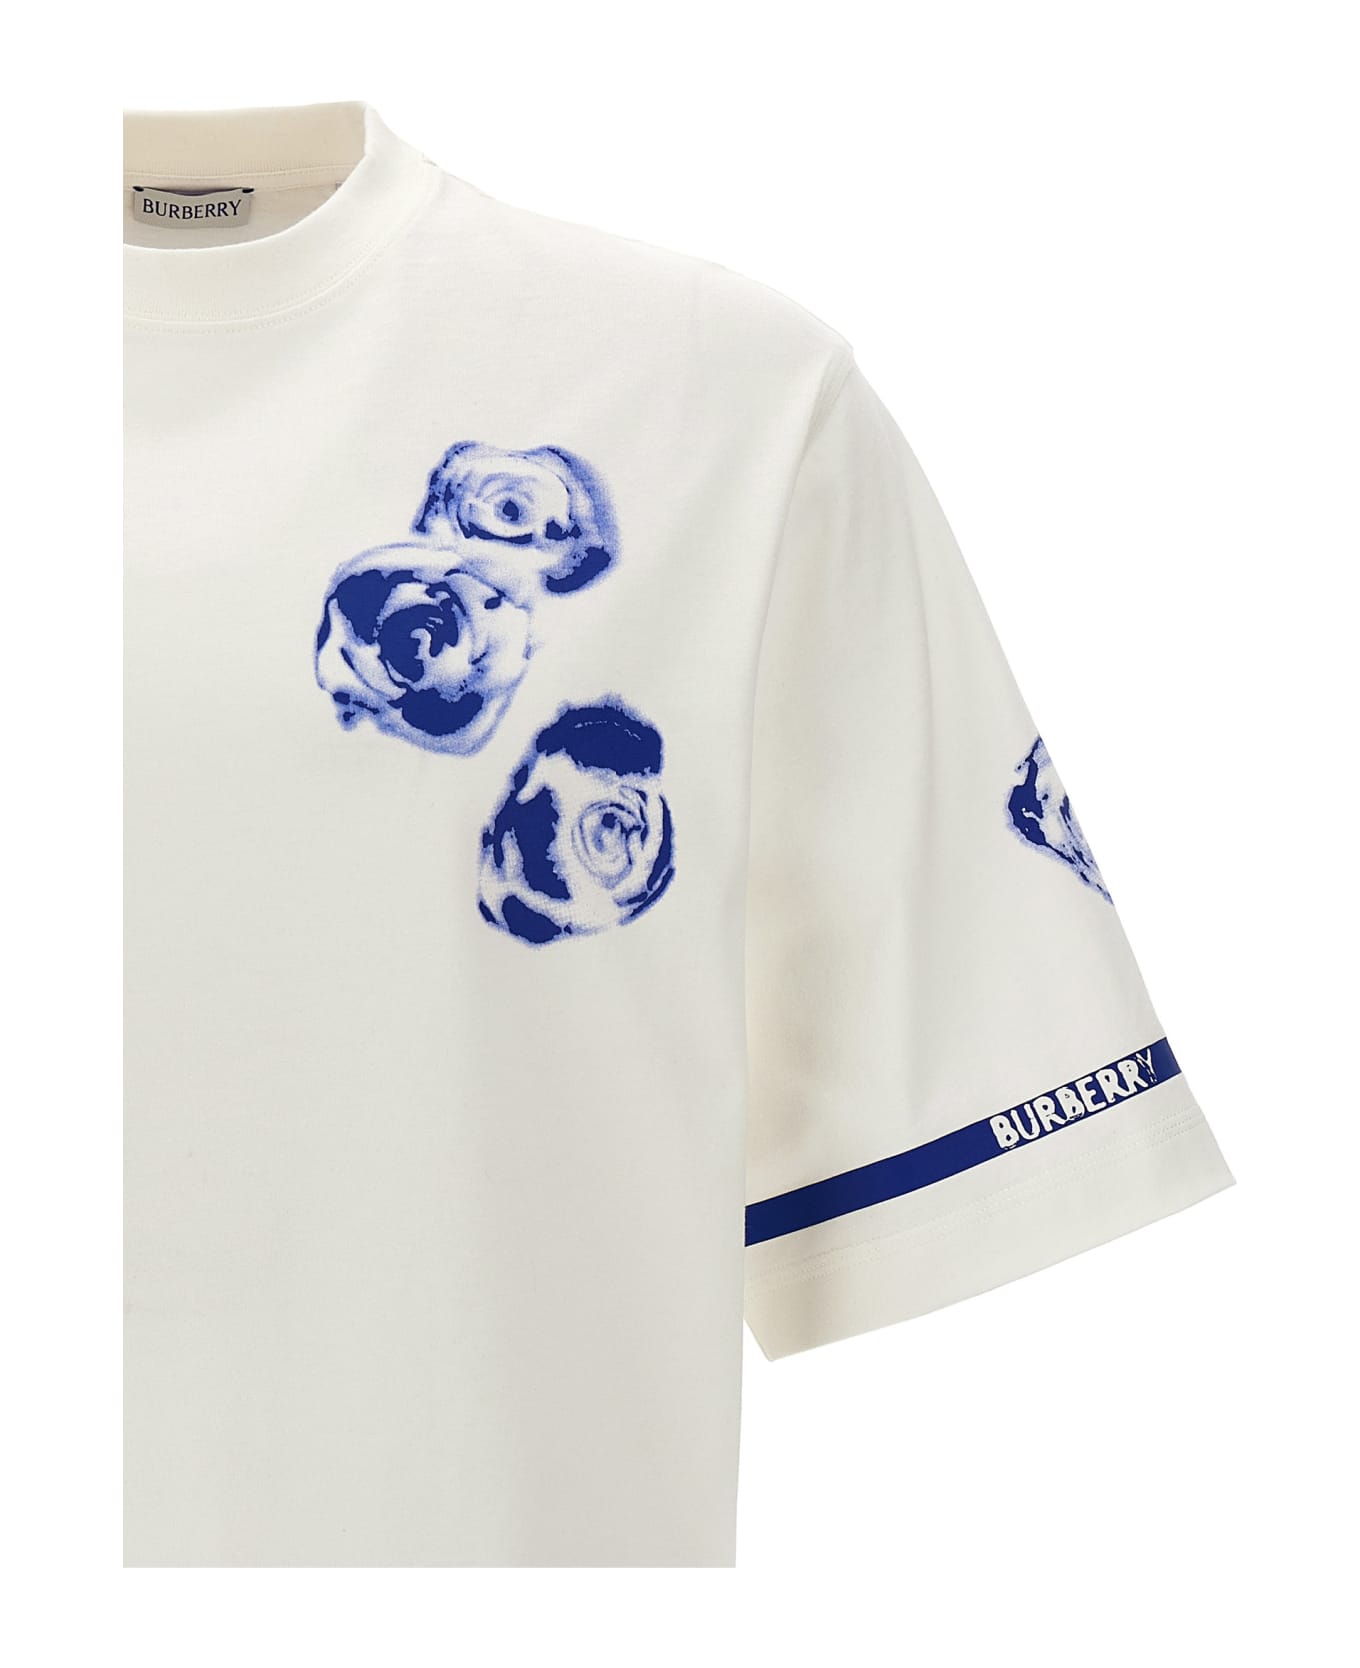 Burberry Printed T-shirt - White